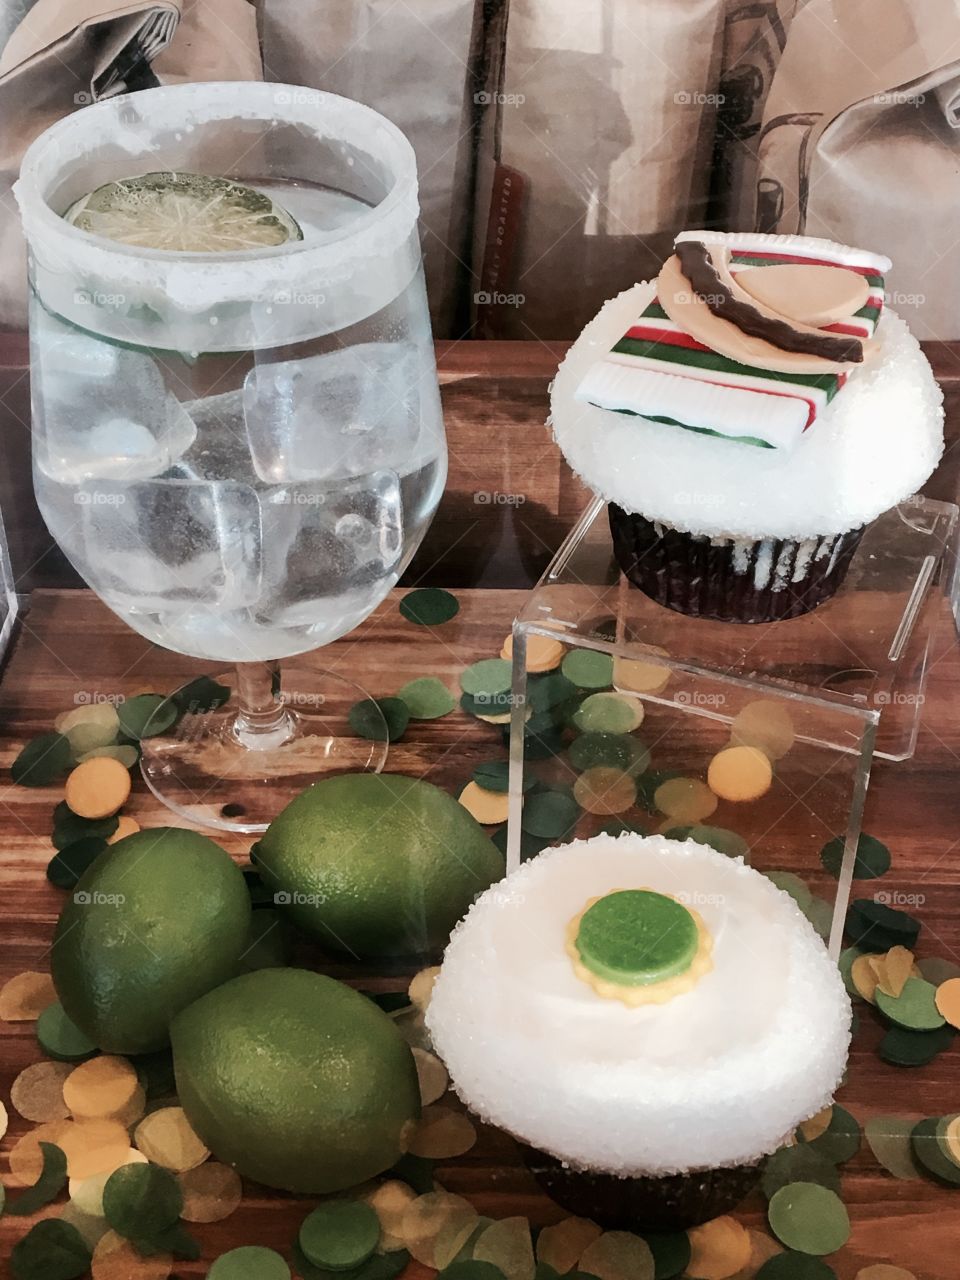 Margarita cupcakes to celebrate cinco de mayo! 